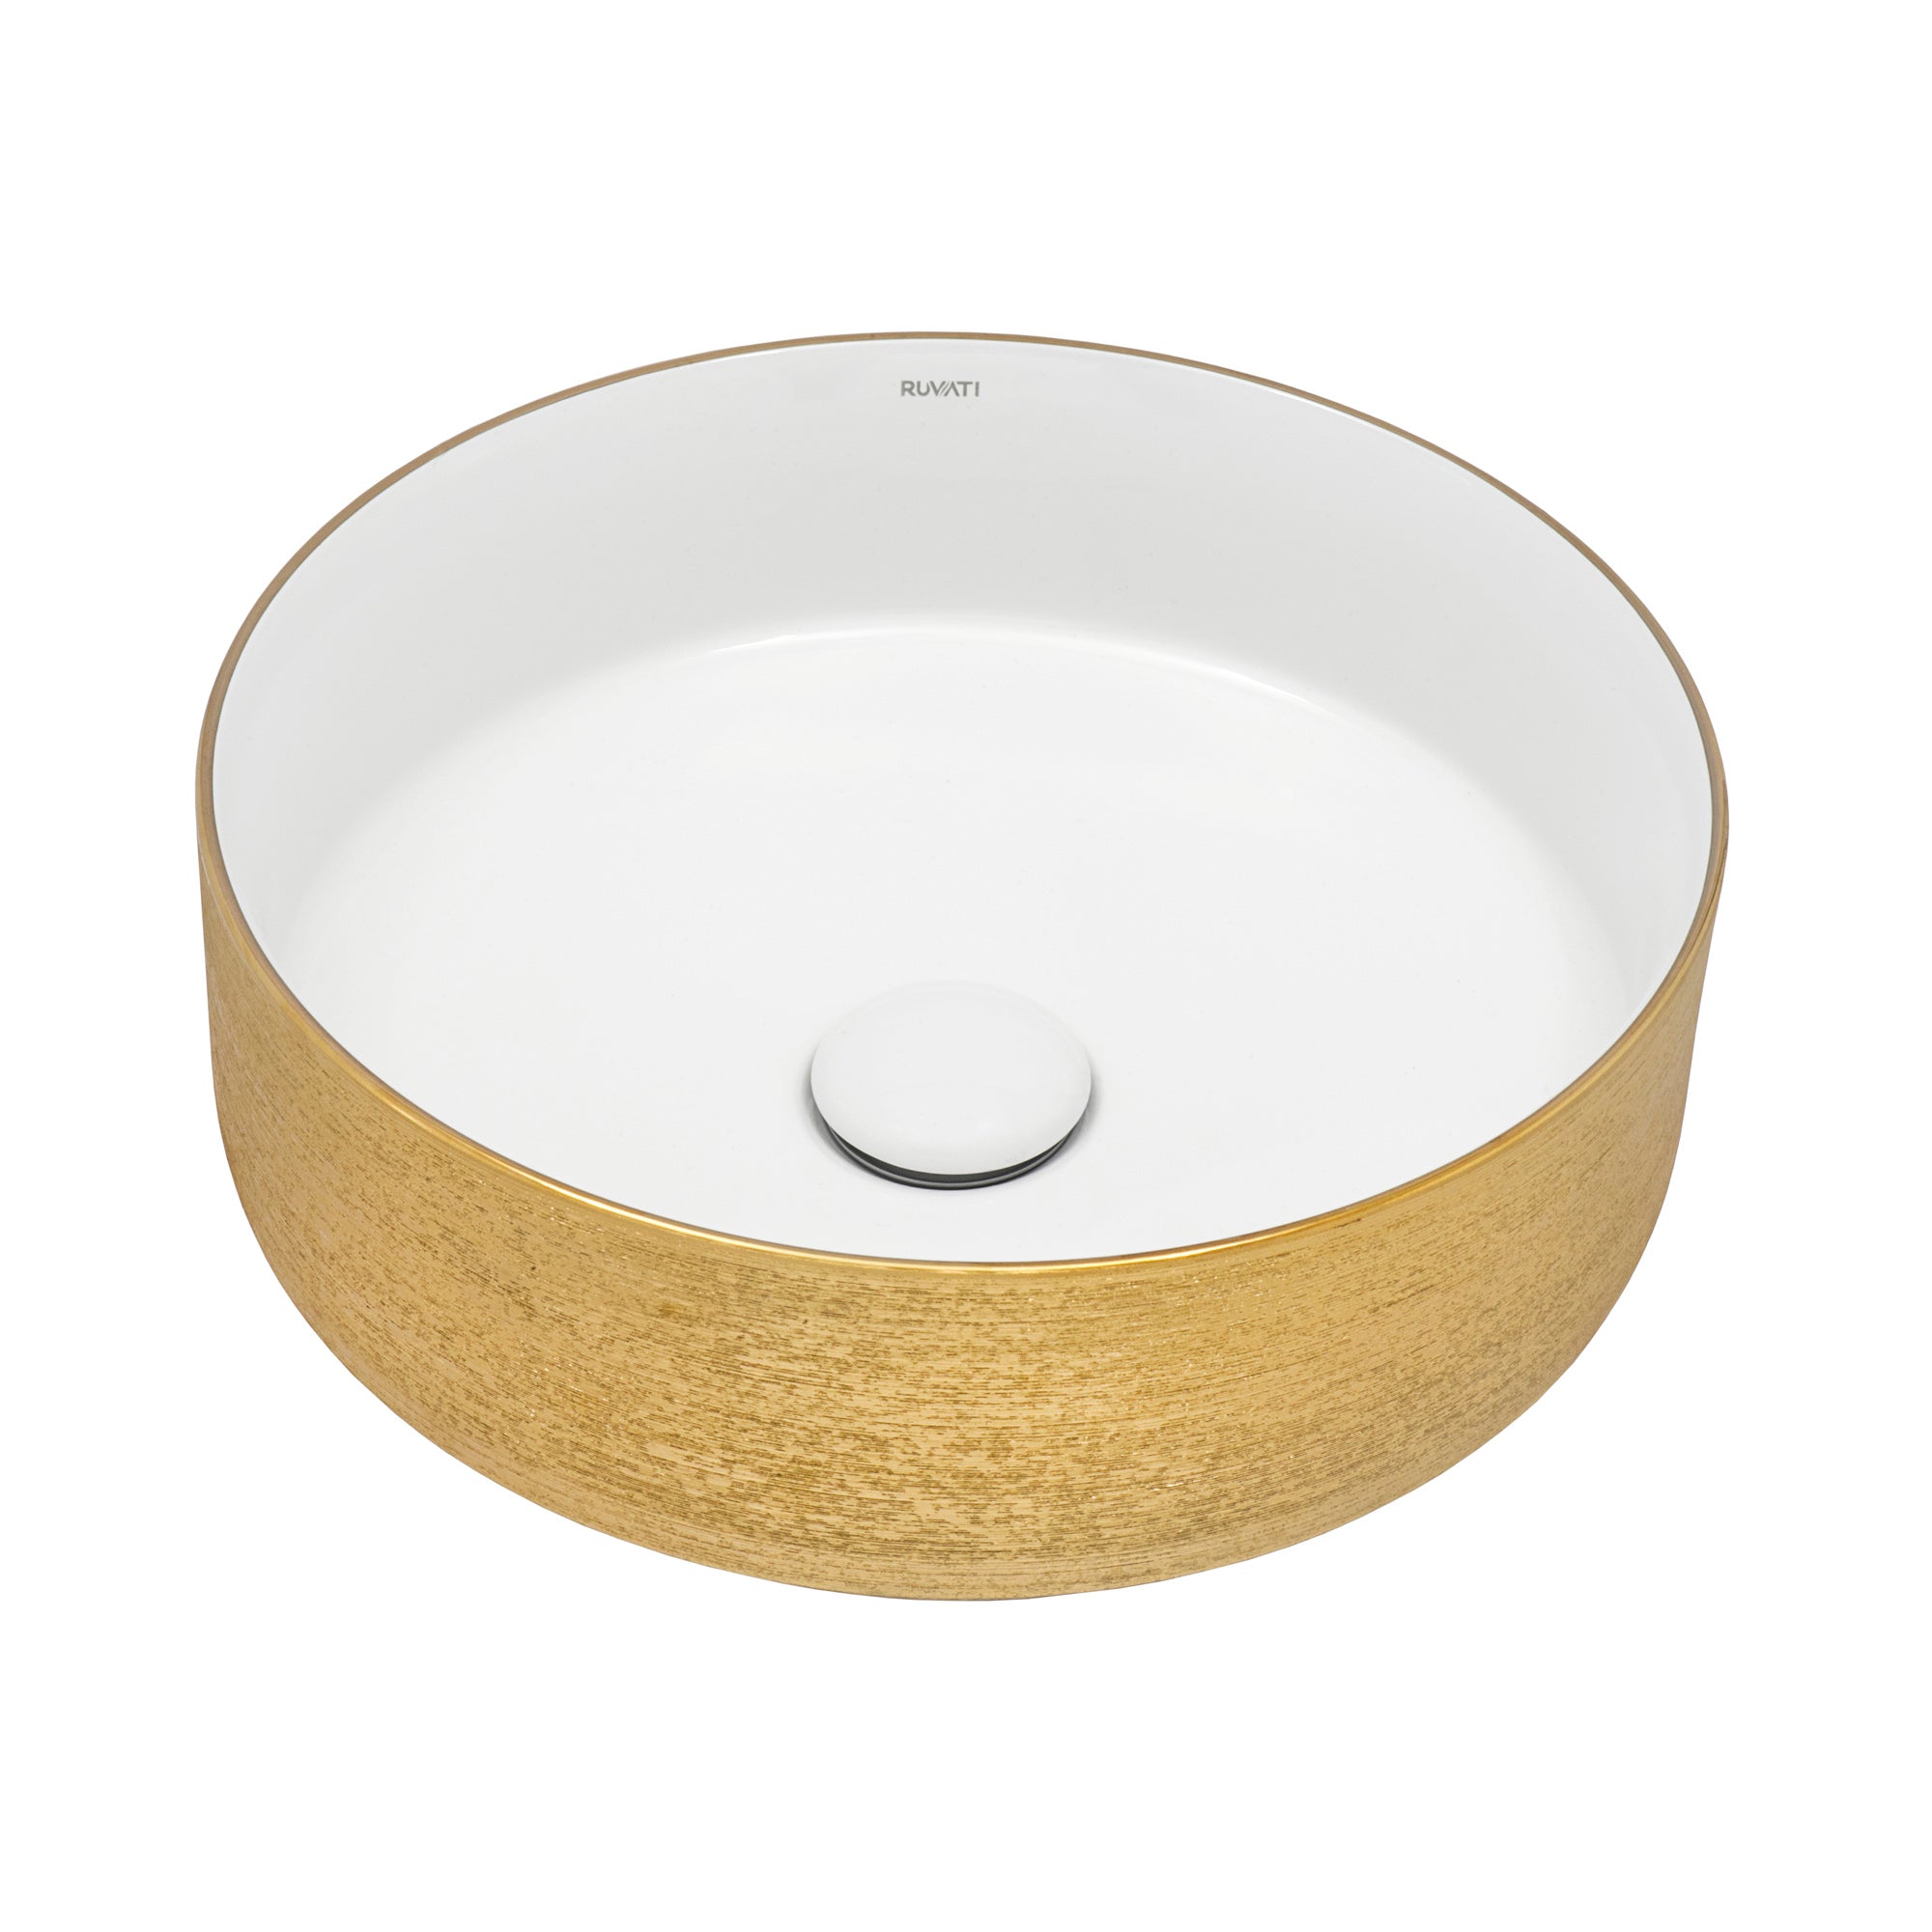 Ruvati 14 inch Bathroom Vessel Sink Round Gold Decorative Art Above Vanity Counter White Ceramic – RVB0314WG